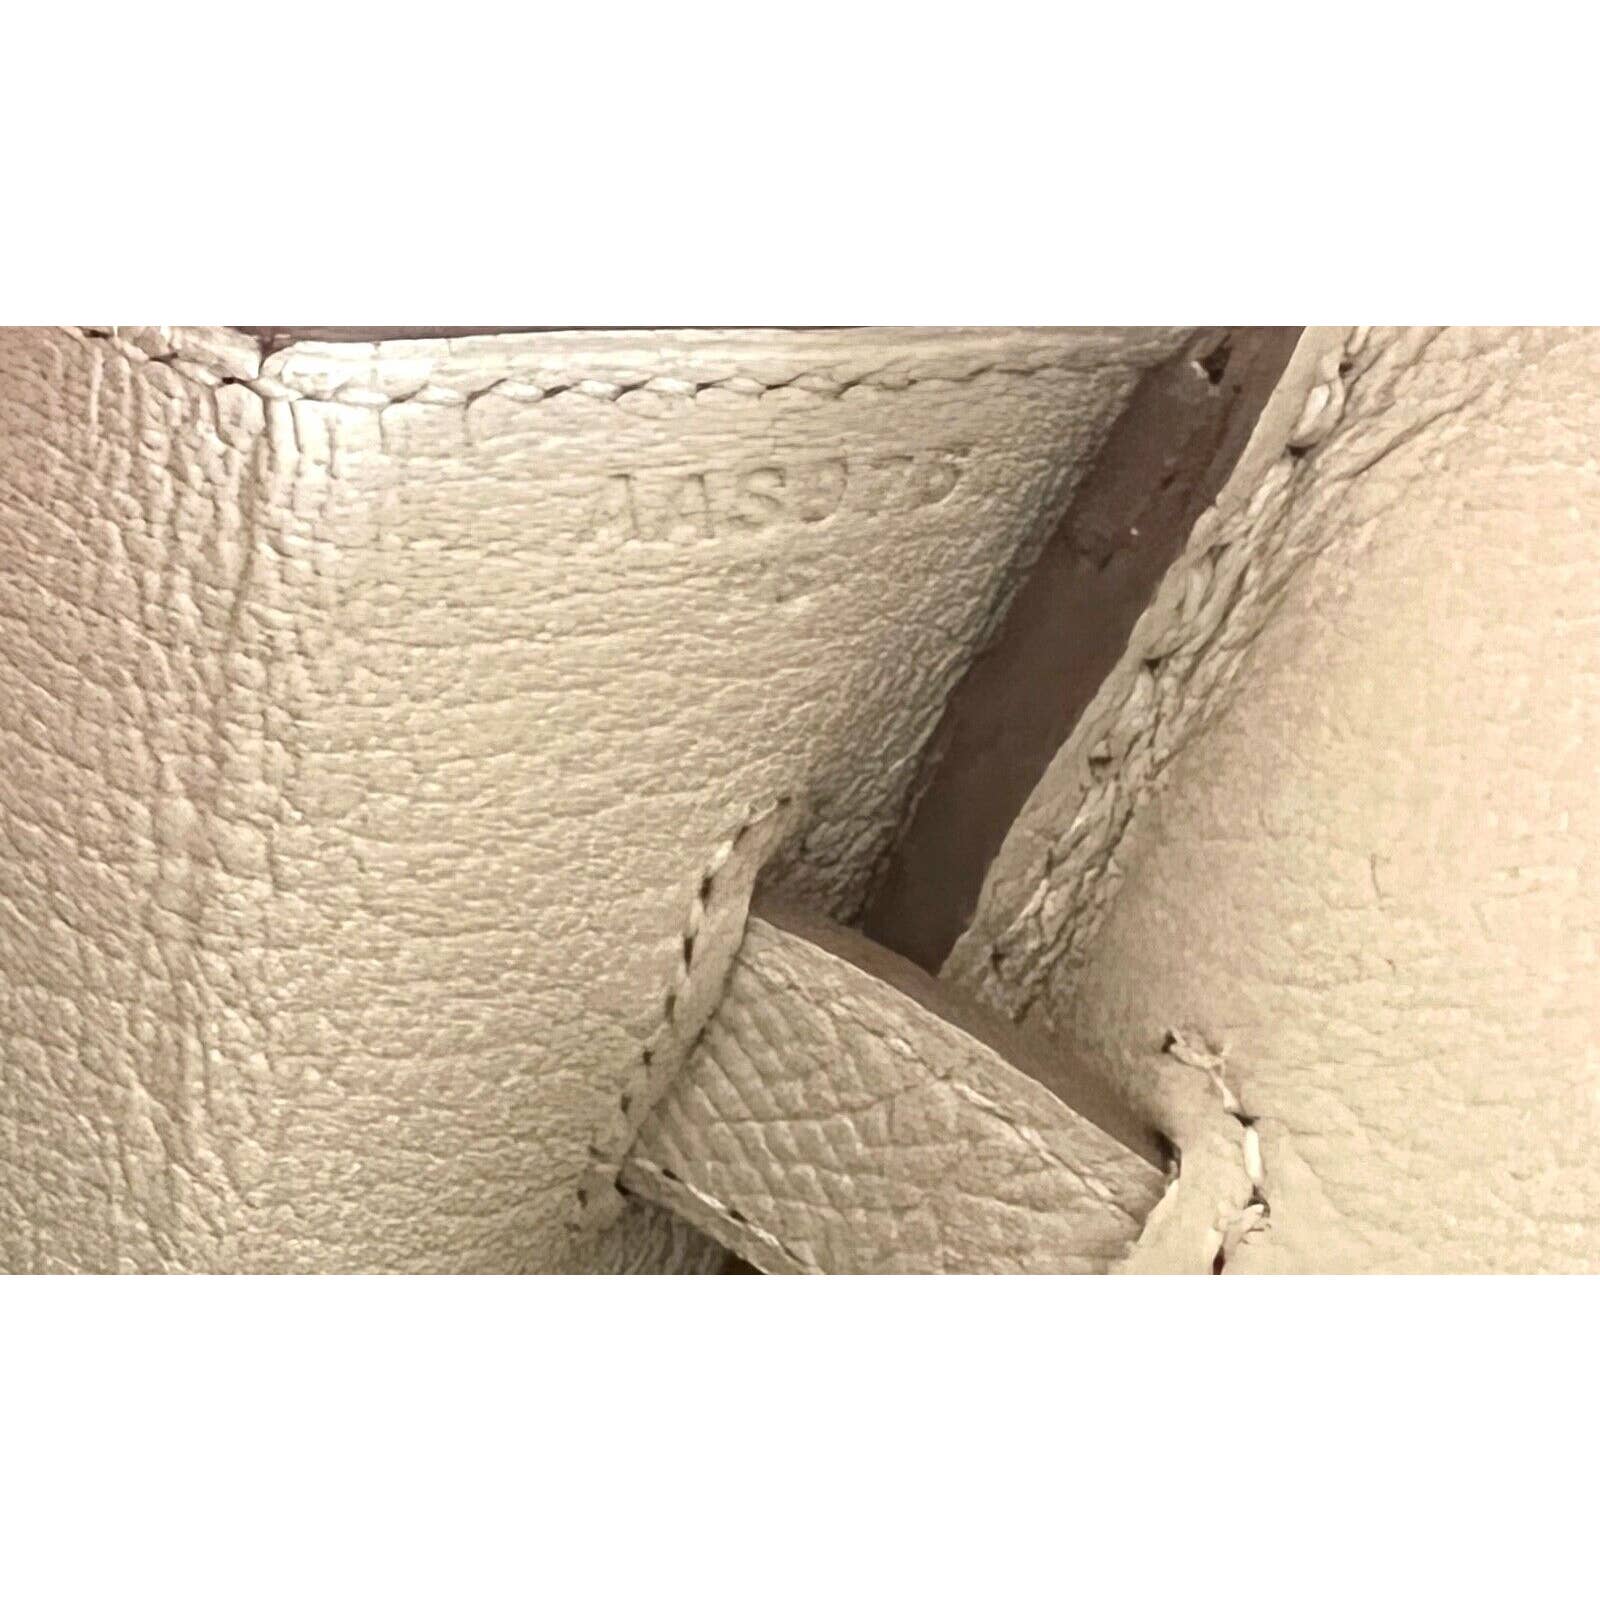 Hermes Birkin 25 Sellier, Craie Epsom Leather with Palladium Hardware, New  in Box WA001